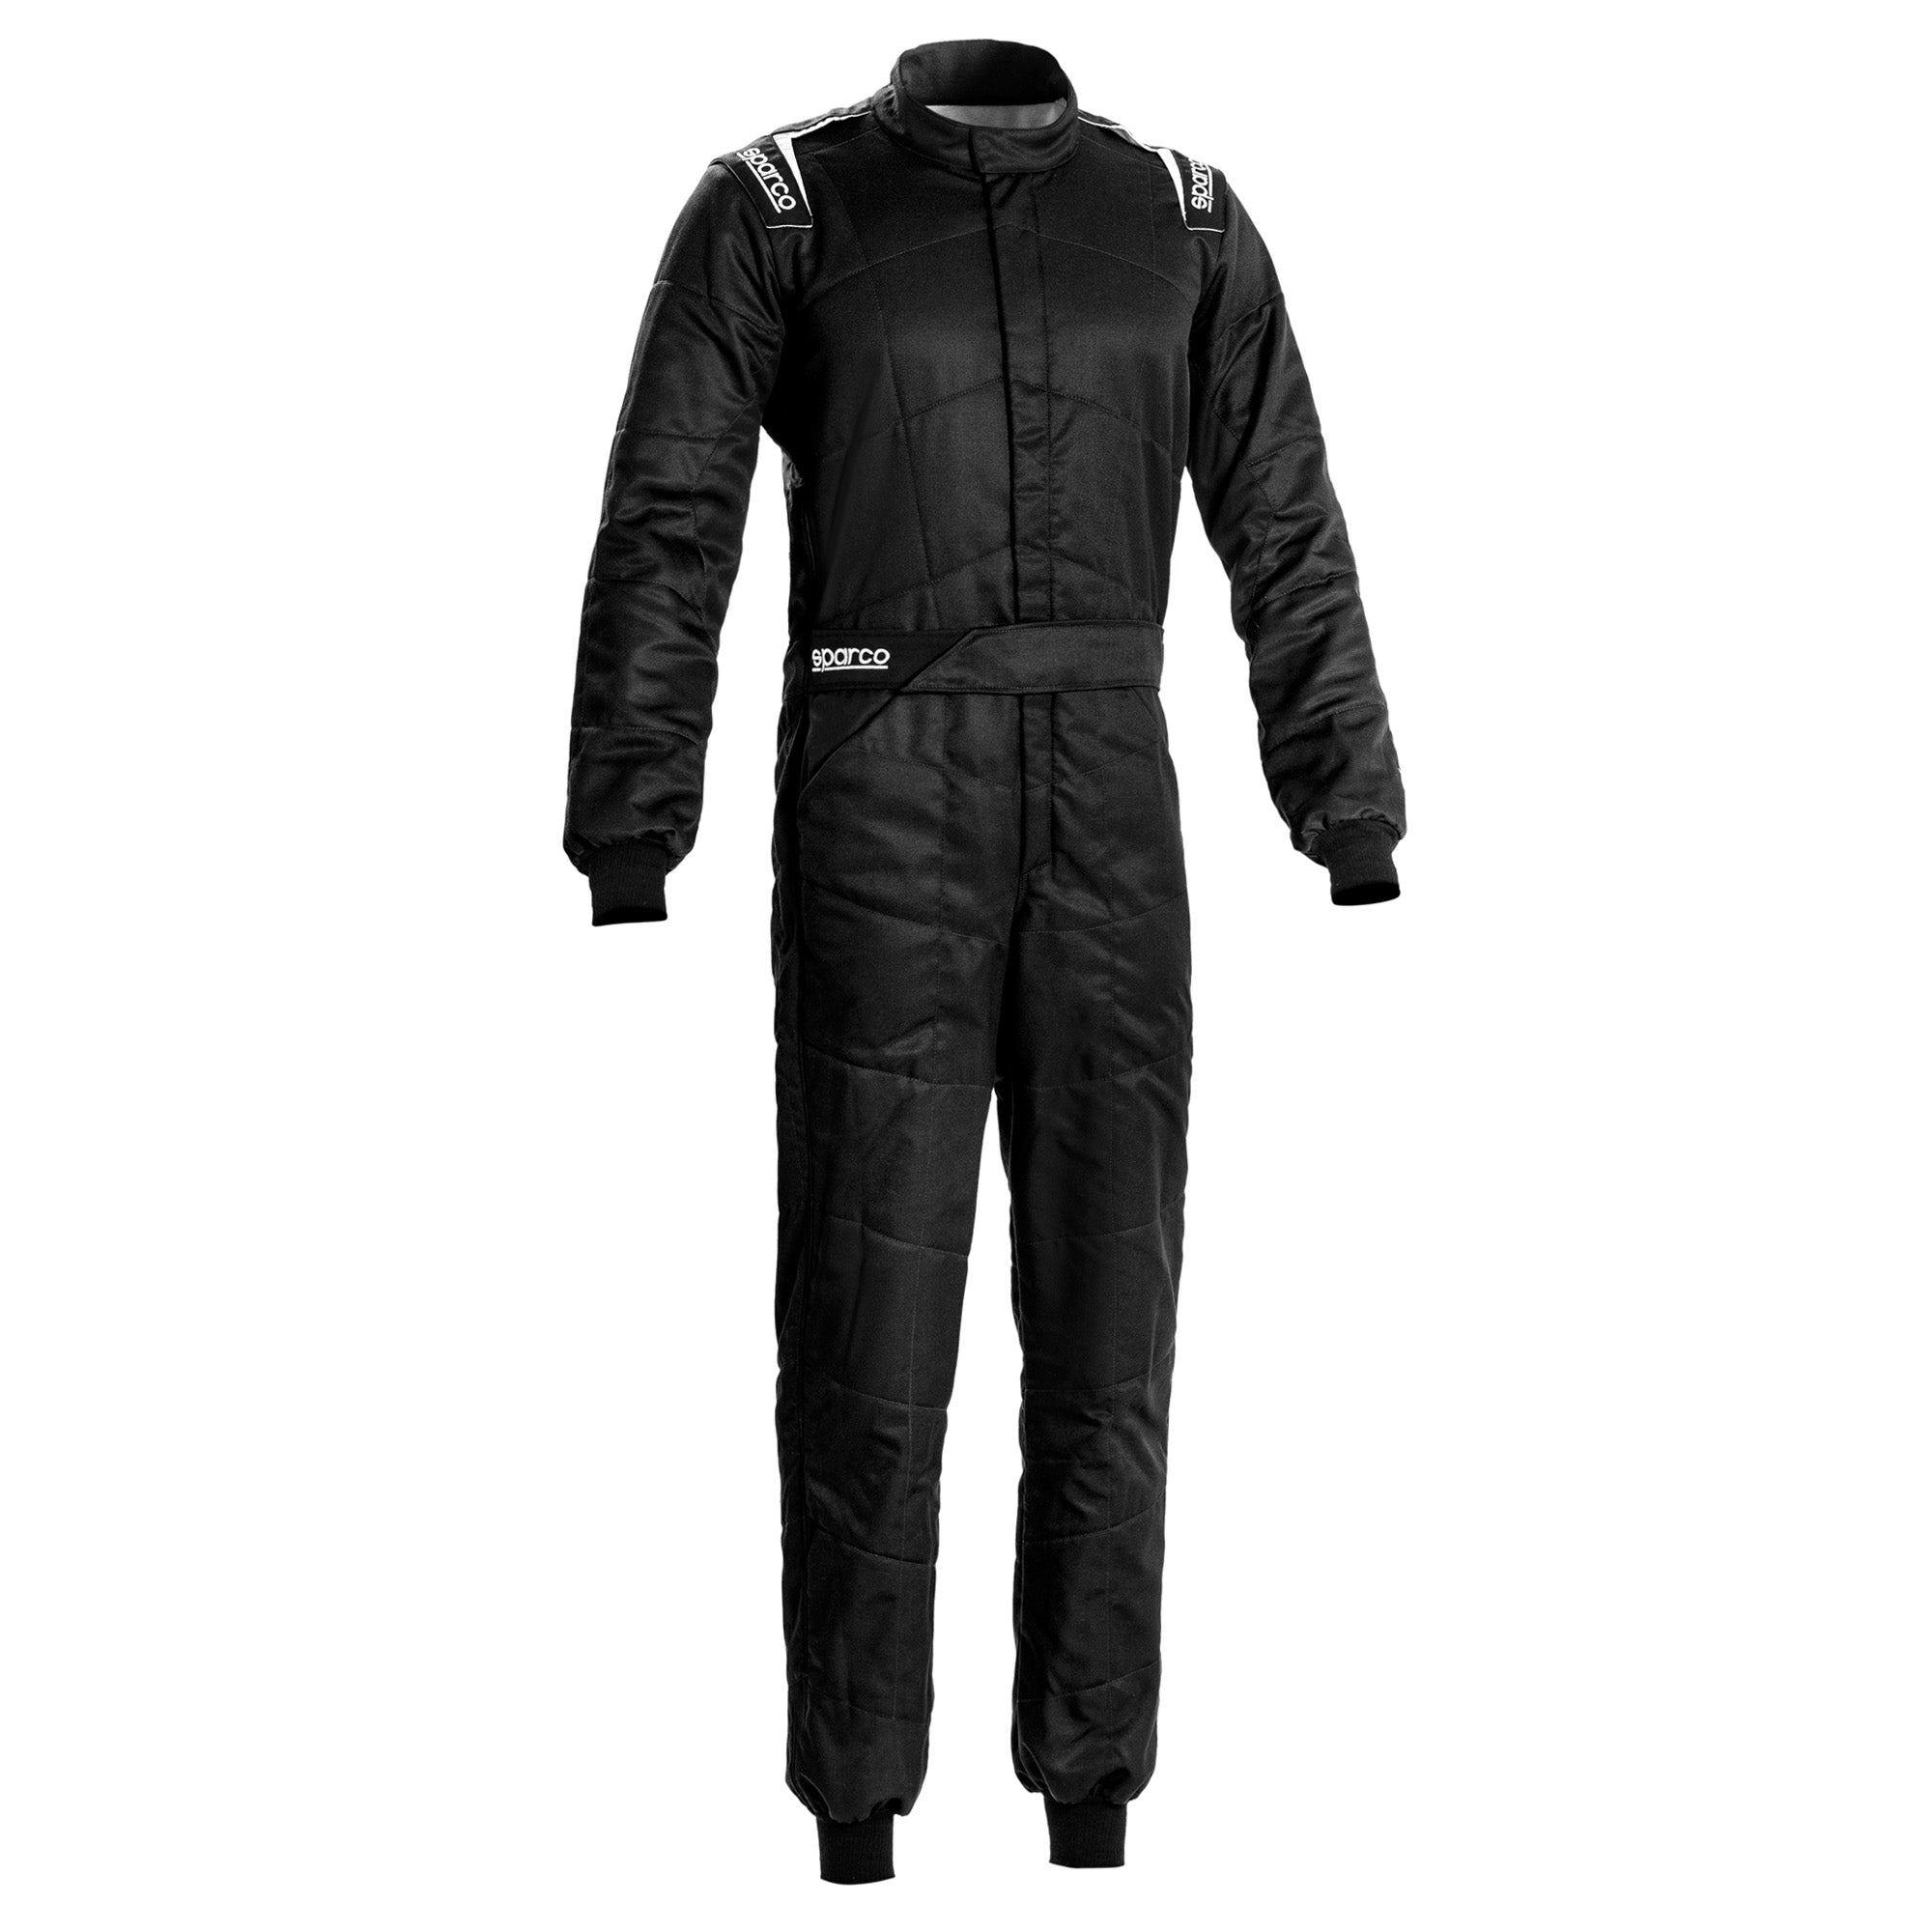 Sparco Sprint Racing Suit - Black